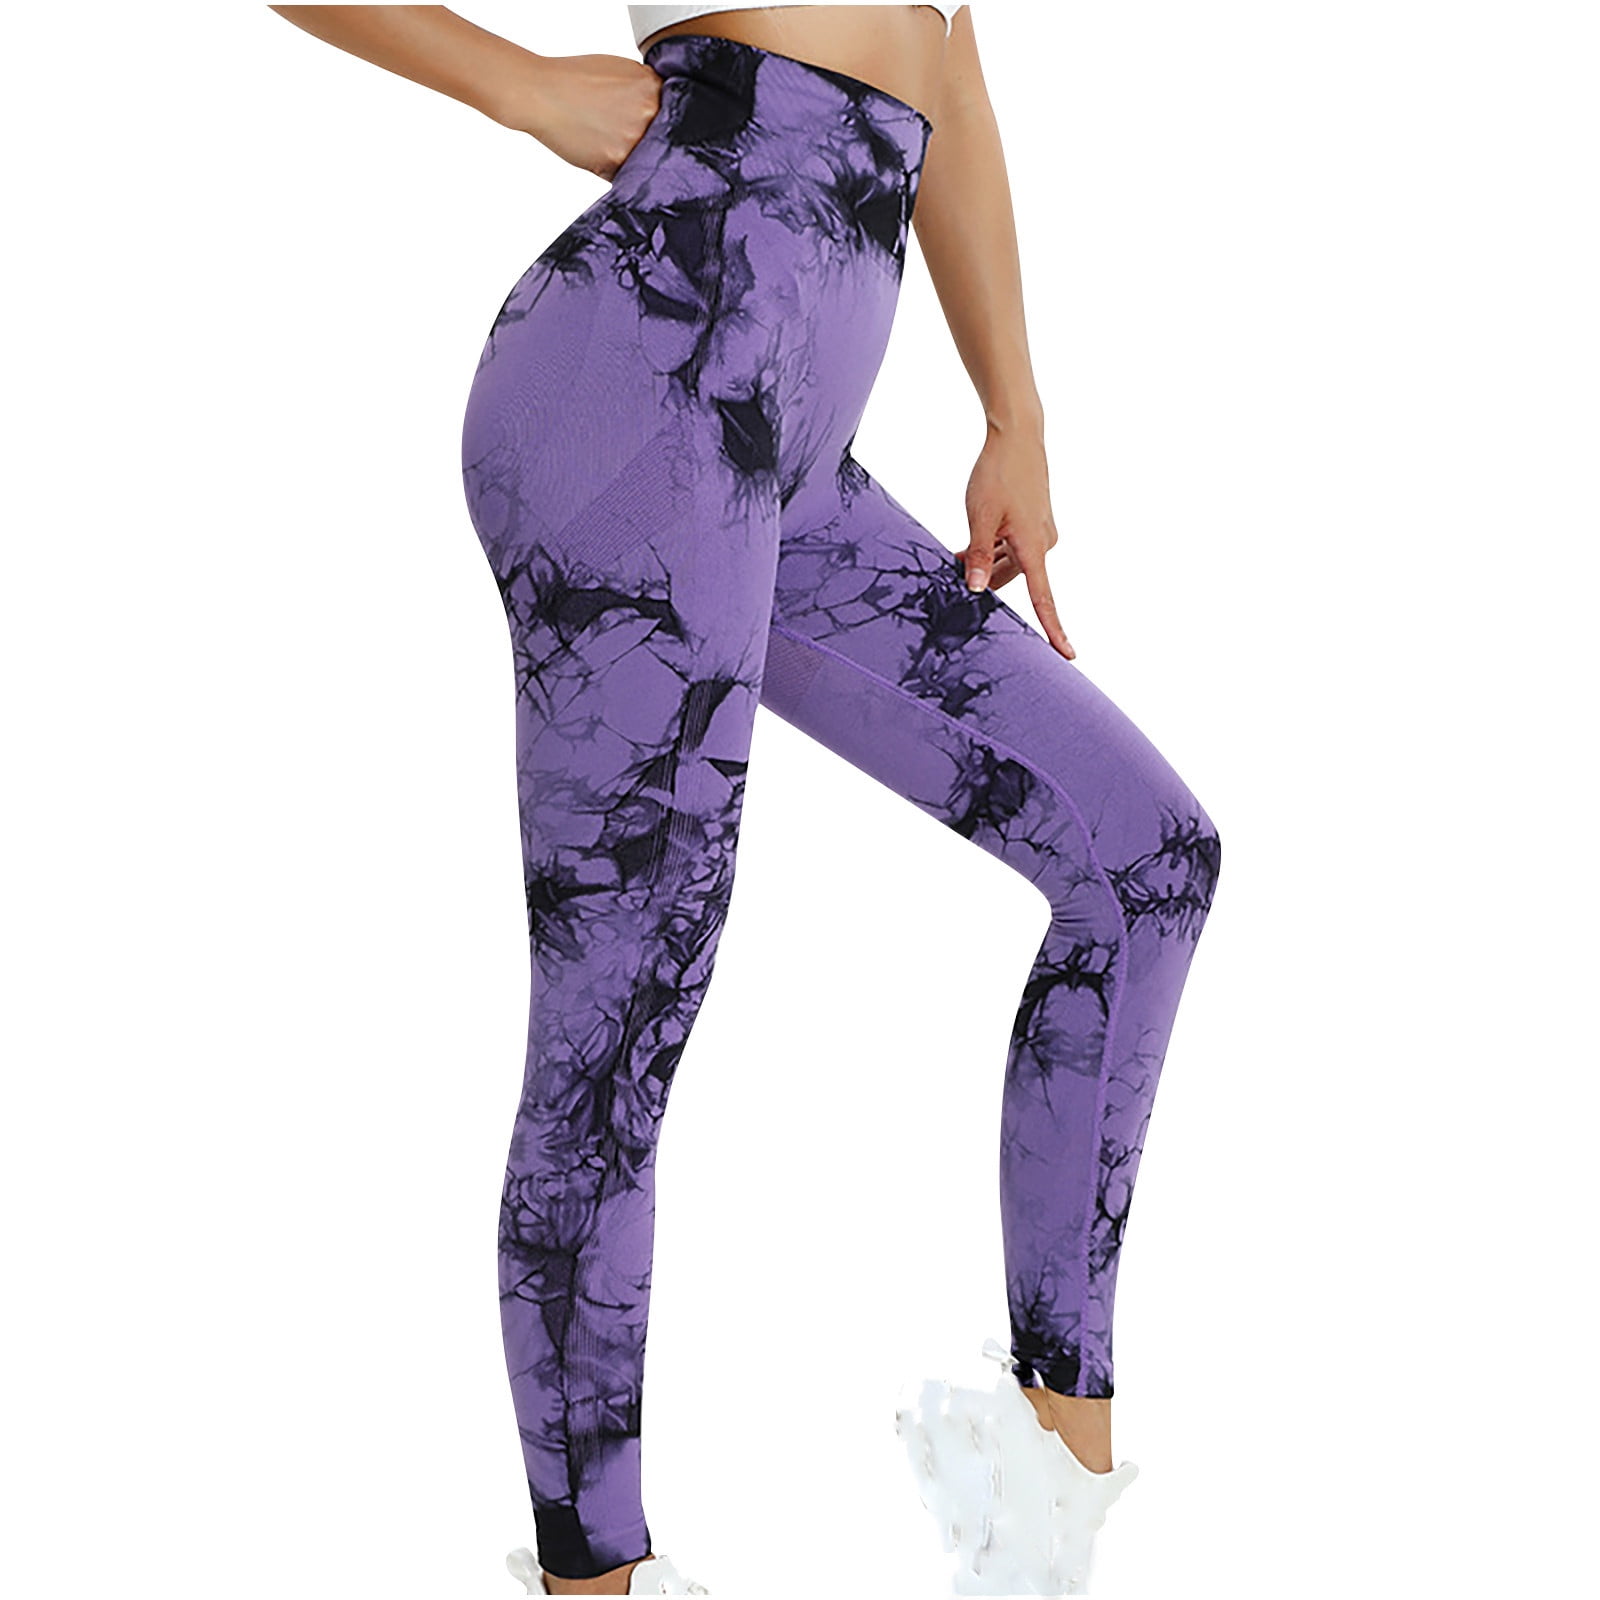 Hfyihgf Tie Dye Seamless Leggings for Women High Waist Outdoor Workout  Running Yoga Pants Scrunch Butt Lifting Stretch Tights Fitness  Pant(Purple,XL) 